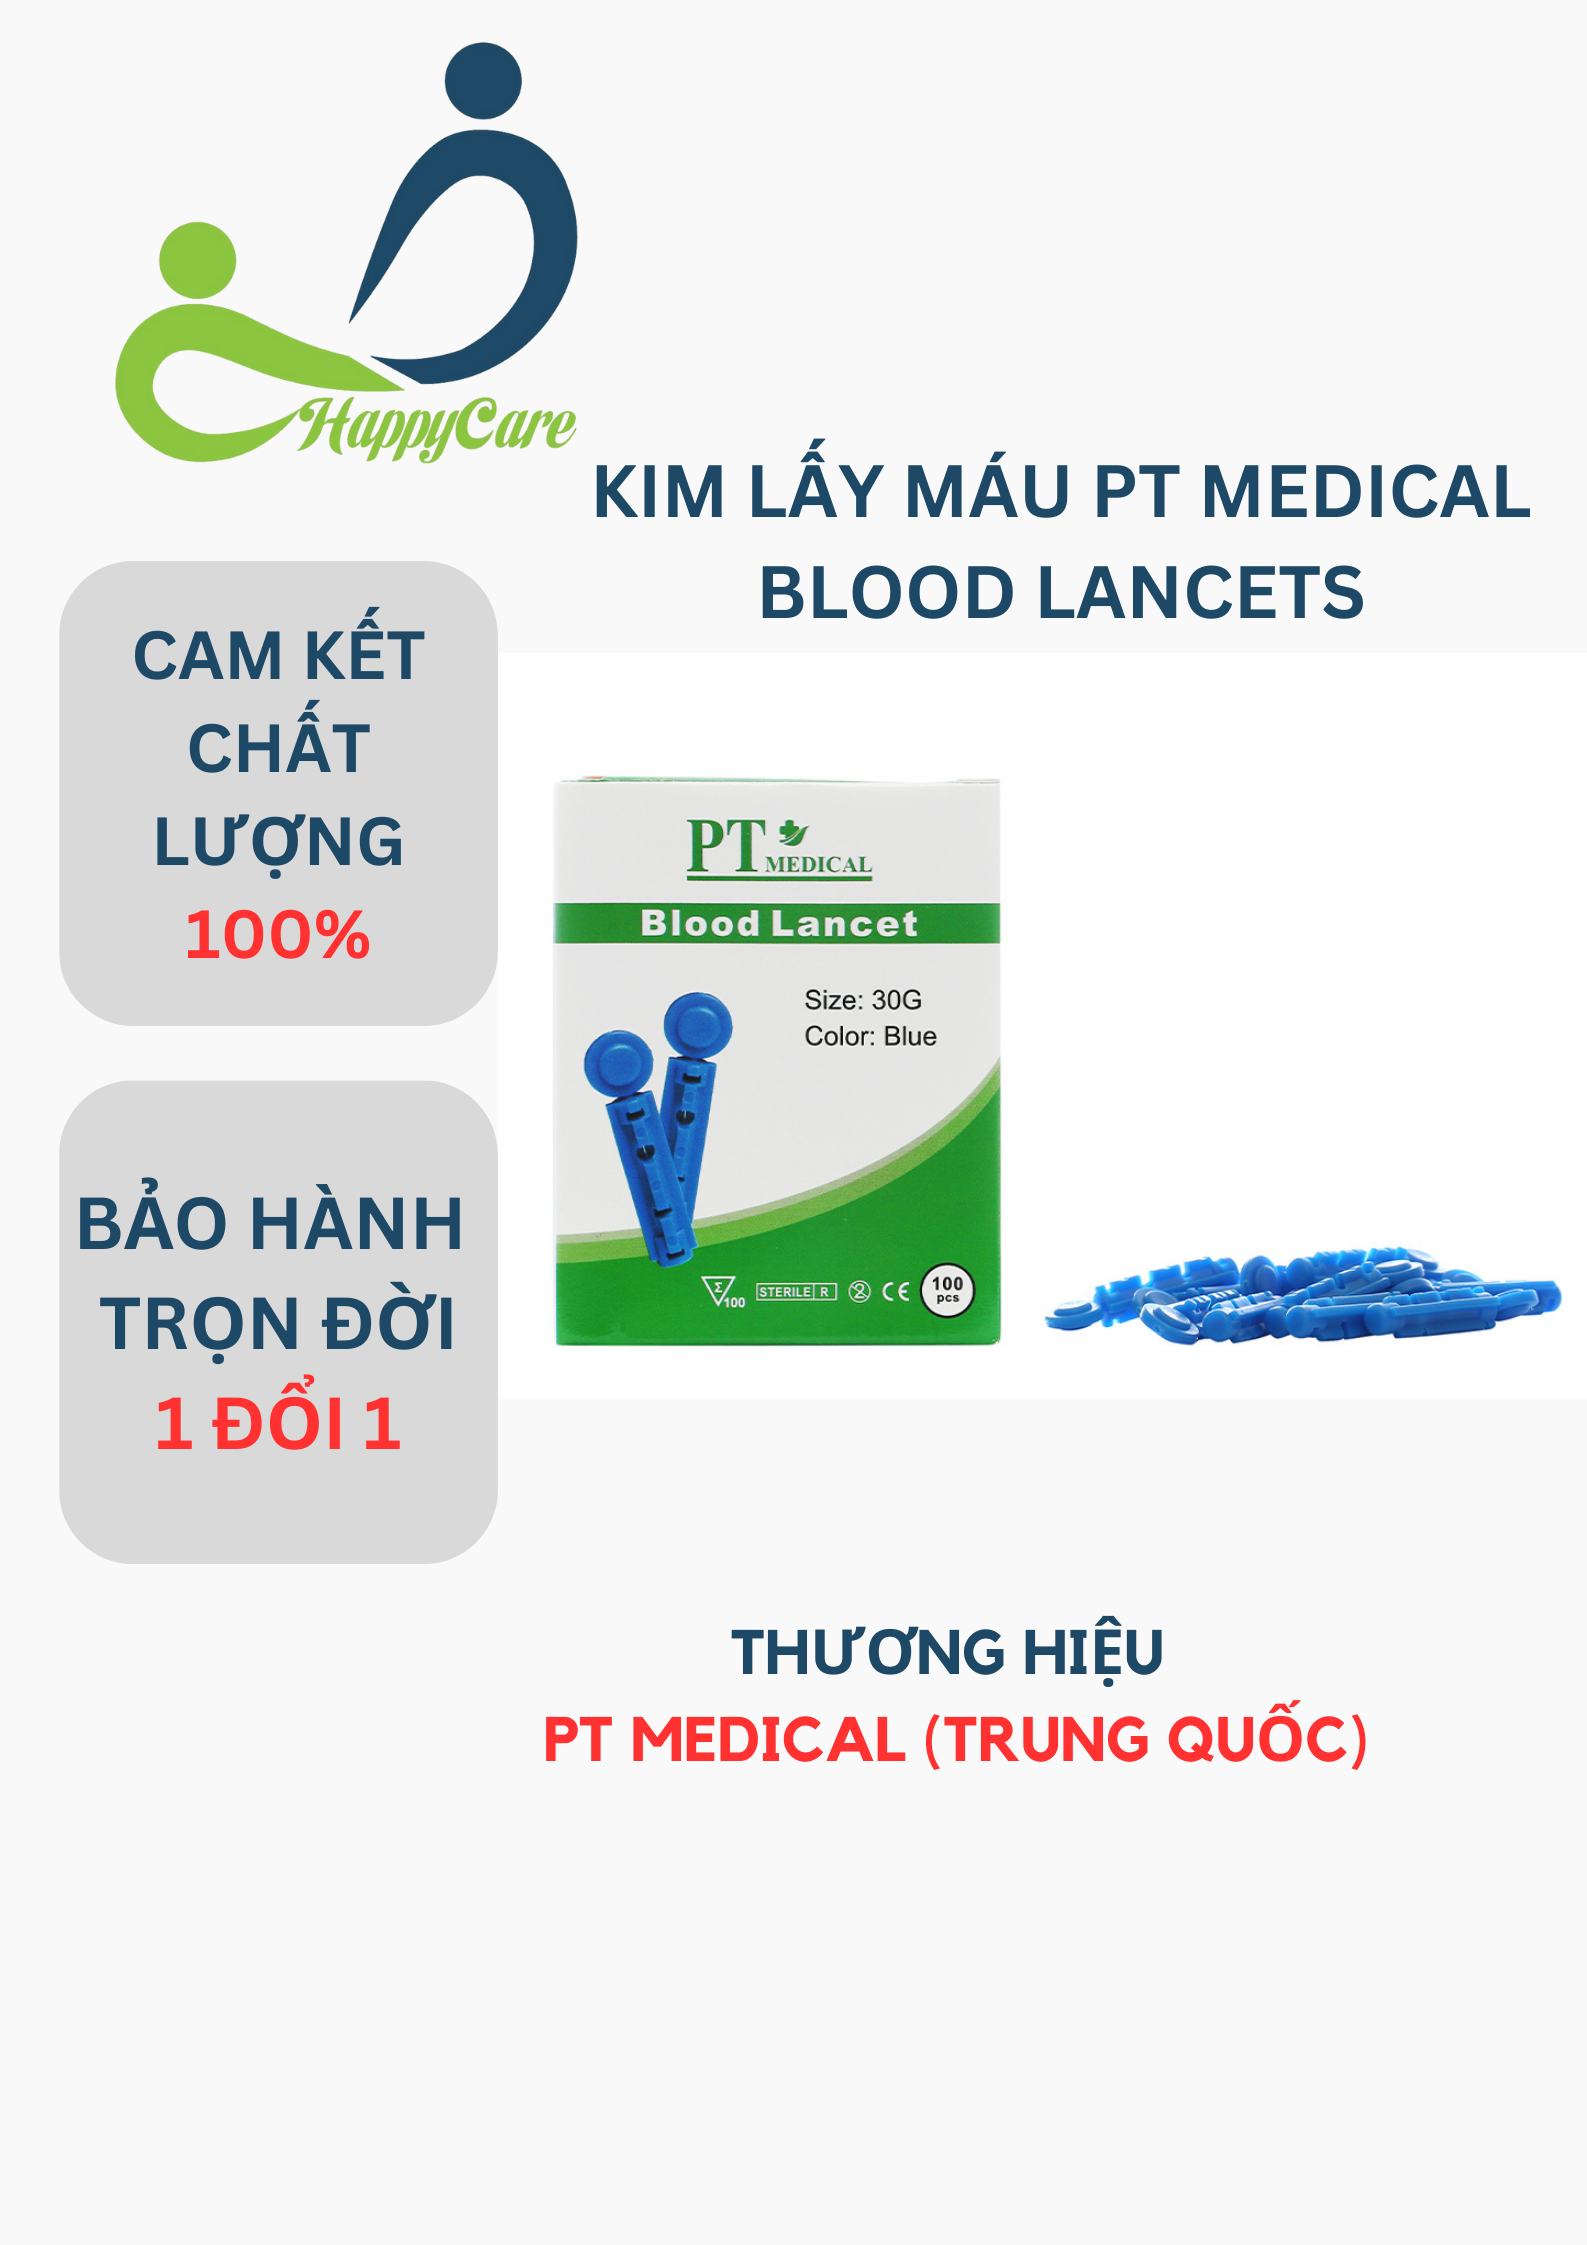 Kim lấy máu PT Medical Blood Lancets